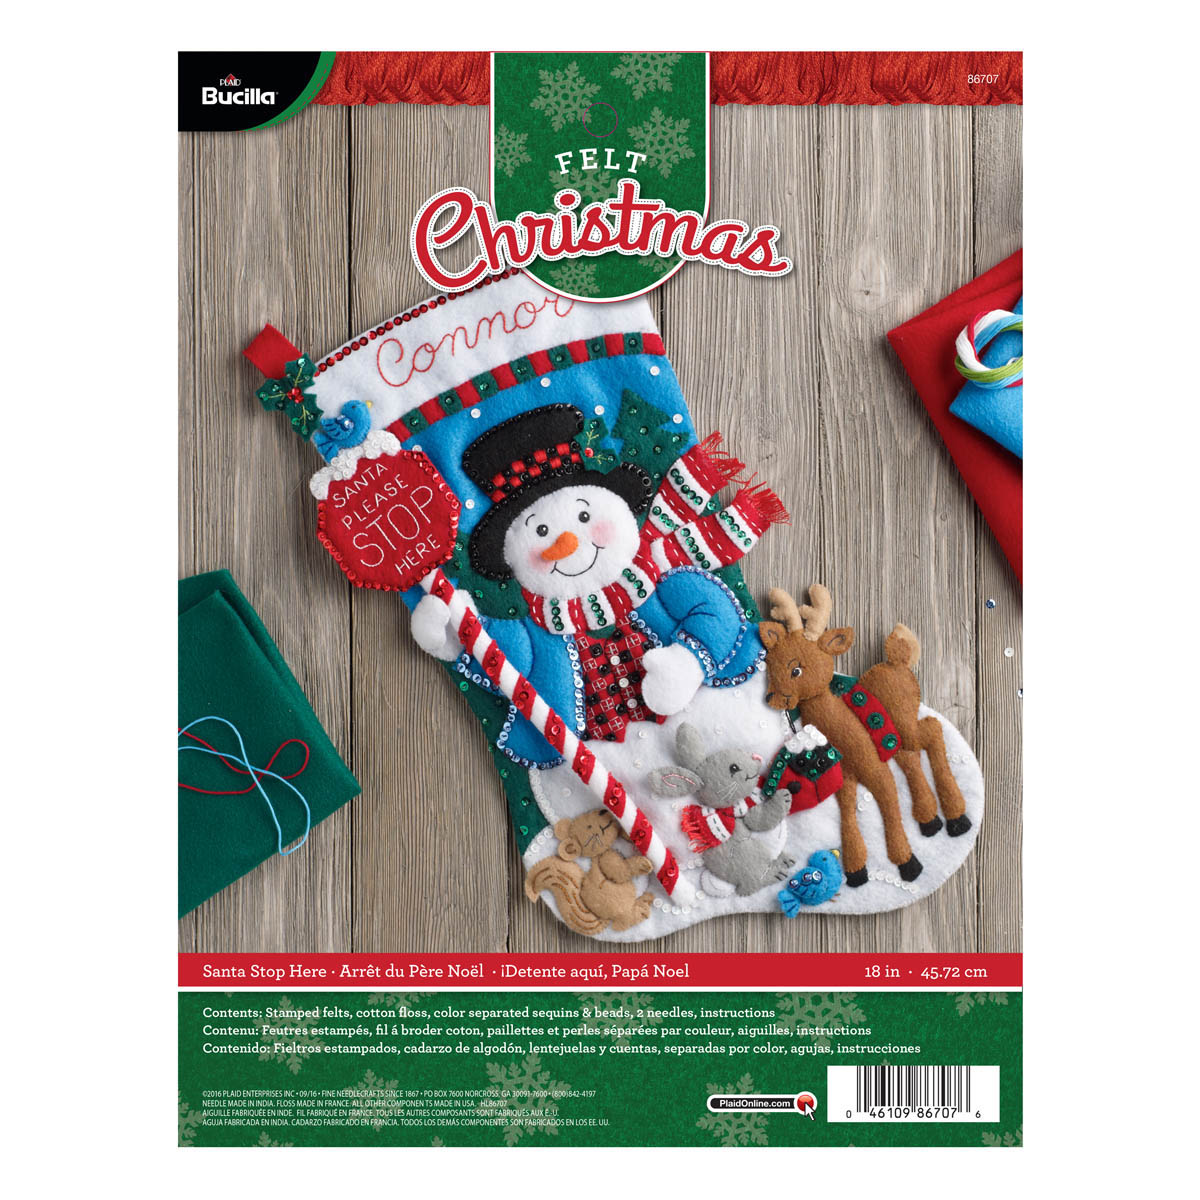 Shop Plaid Bucilla ® Seasonal - Felt - Stocking Kits - Light Up